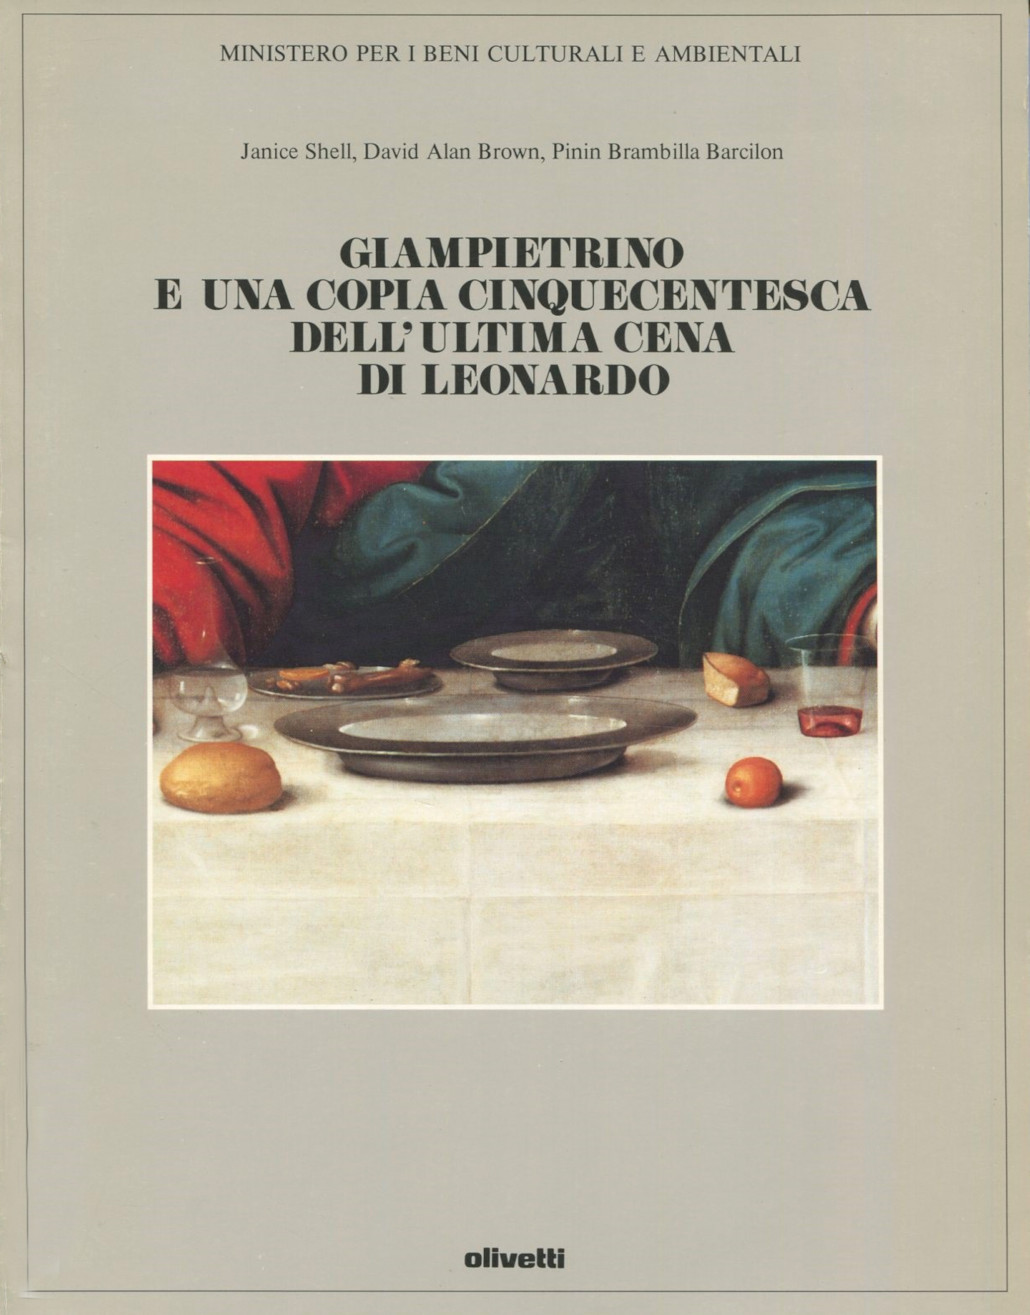 Gianpietrino and a sixteenth-century copy of Leonardo da Vinci’s The Last Supper